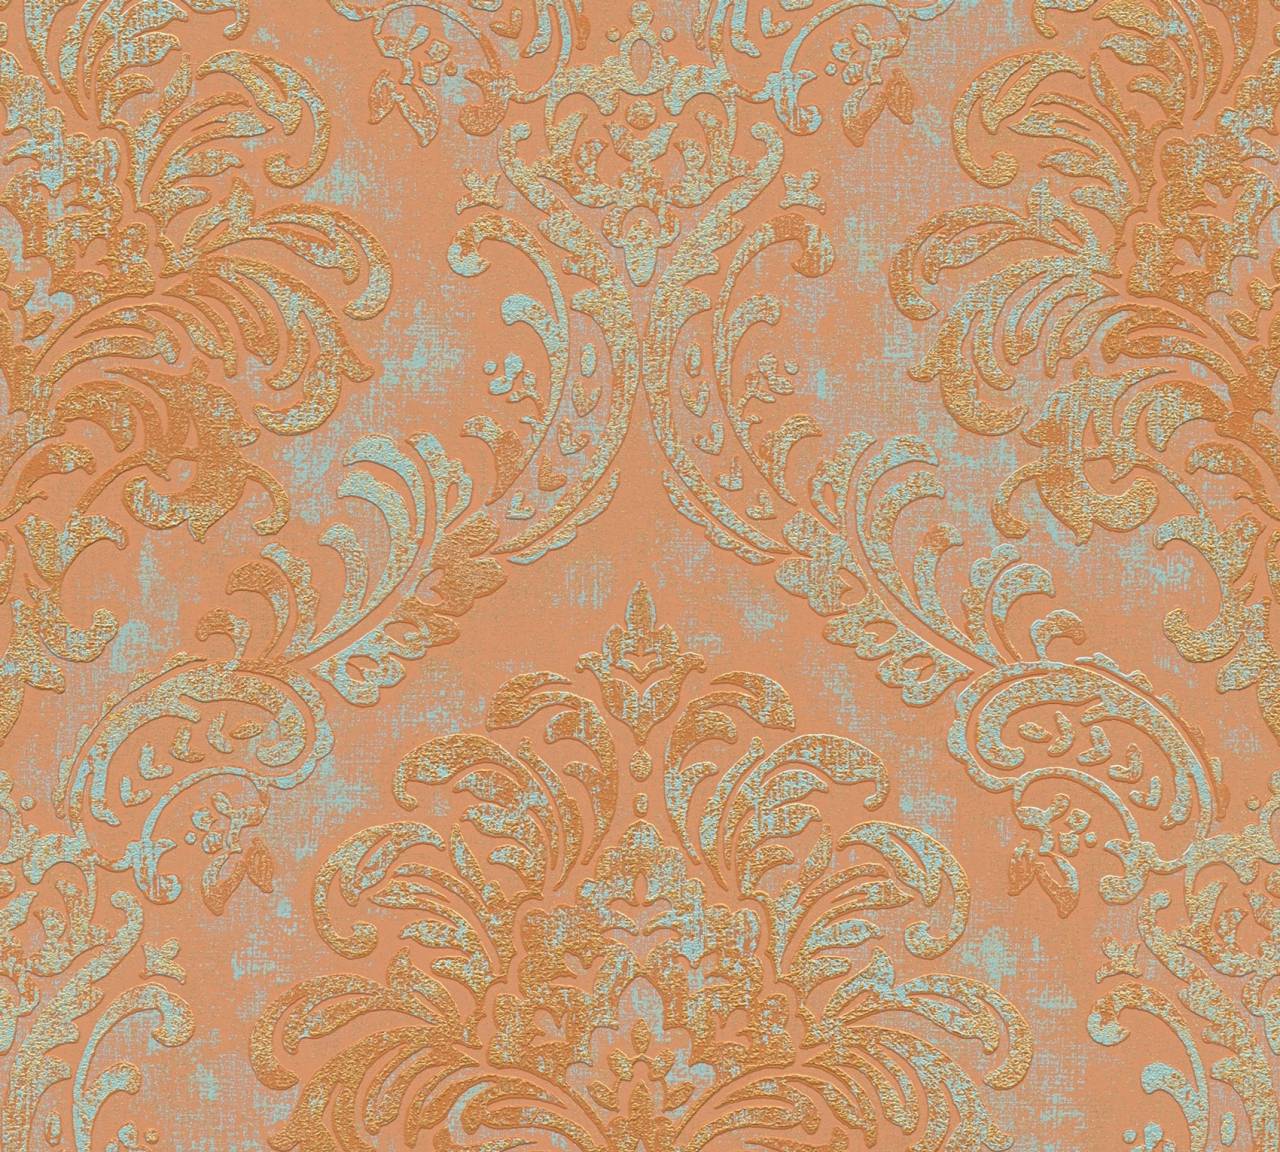 As fleece wallpaper MS Travel Styles Classic Orange 391121